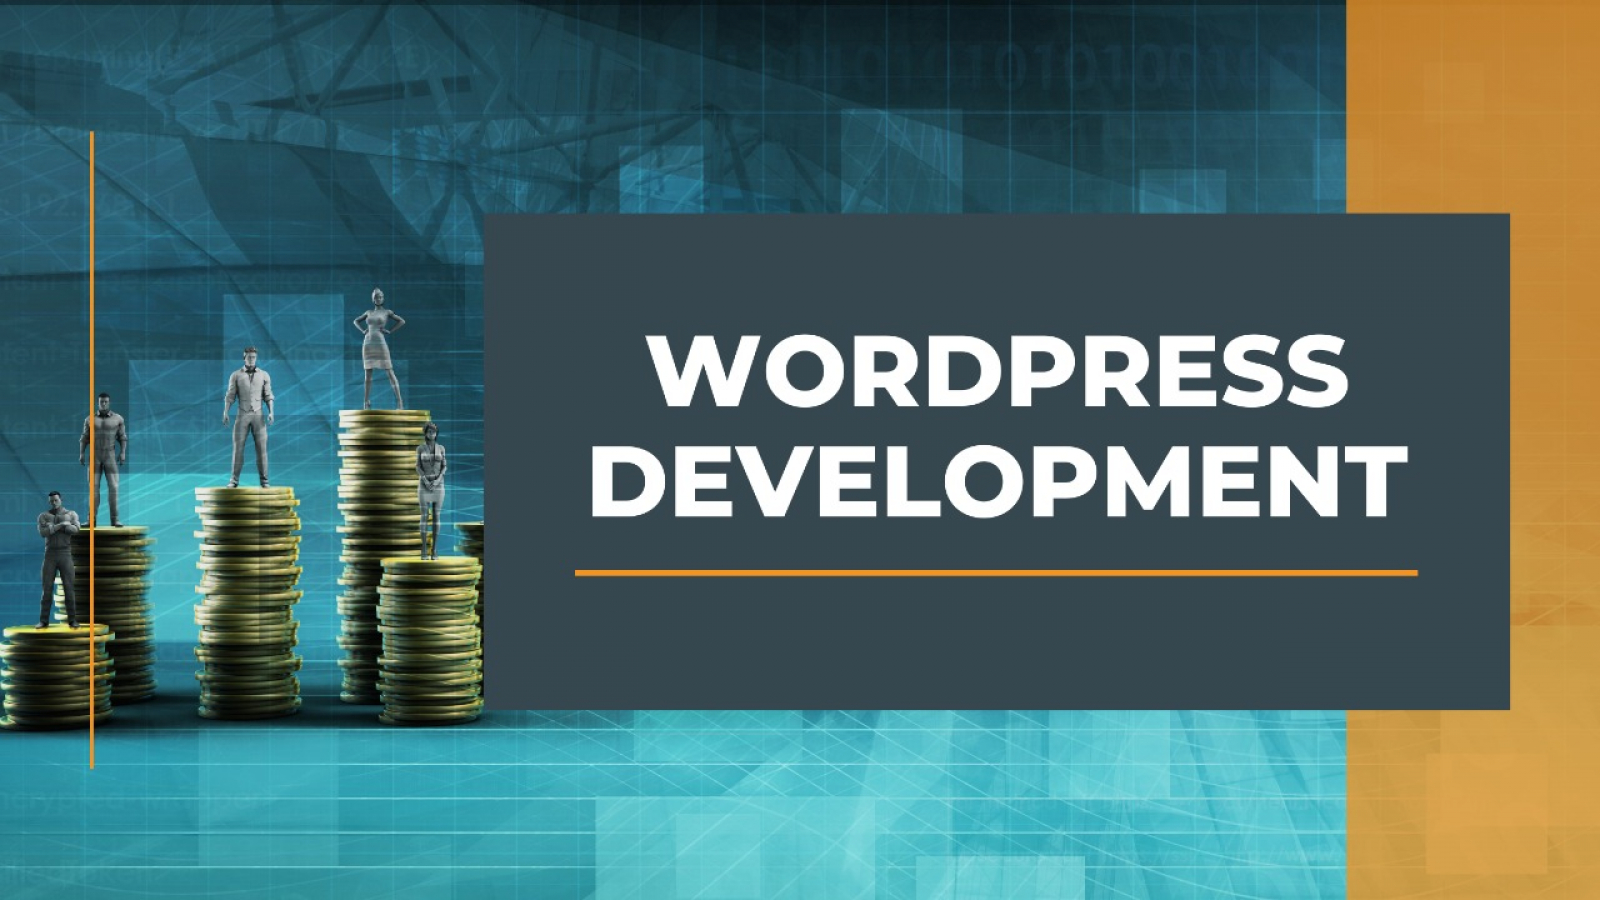 WordPress staging website